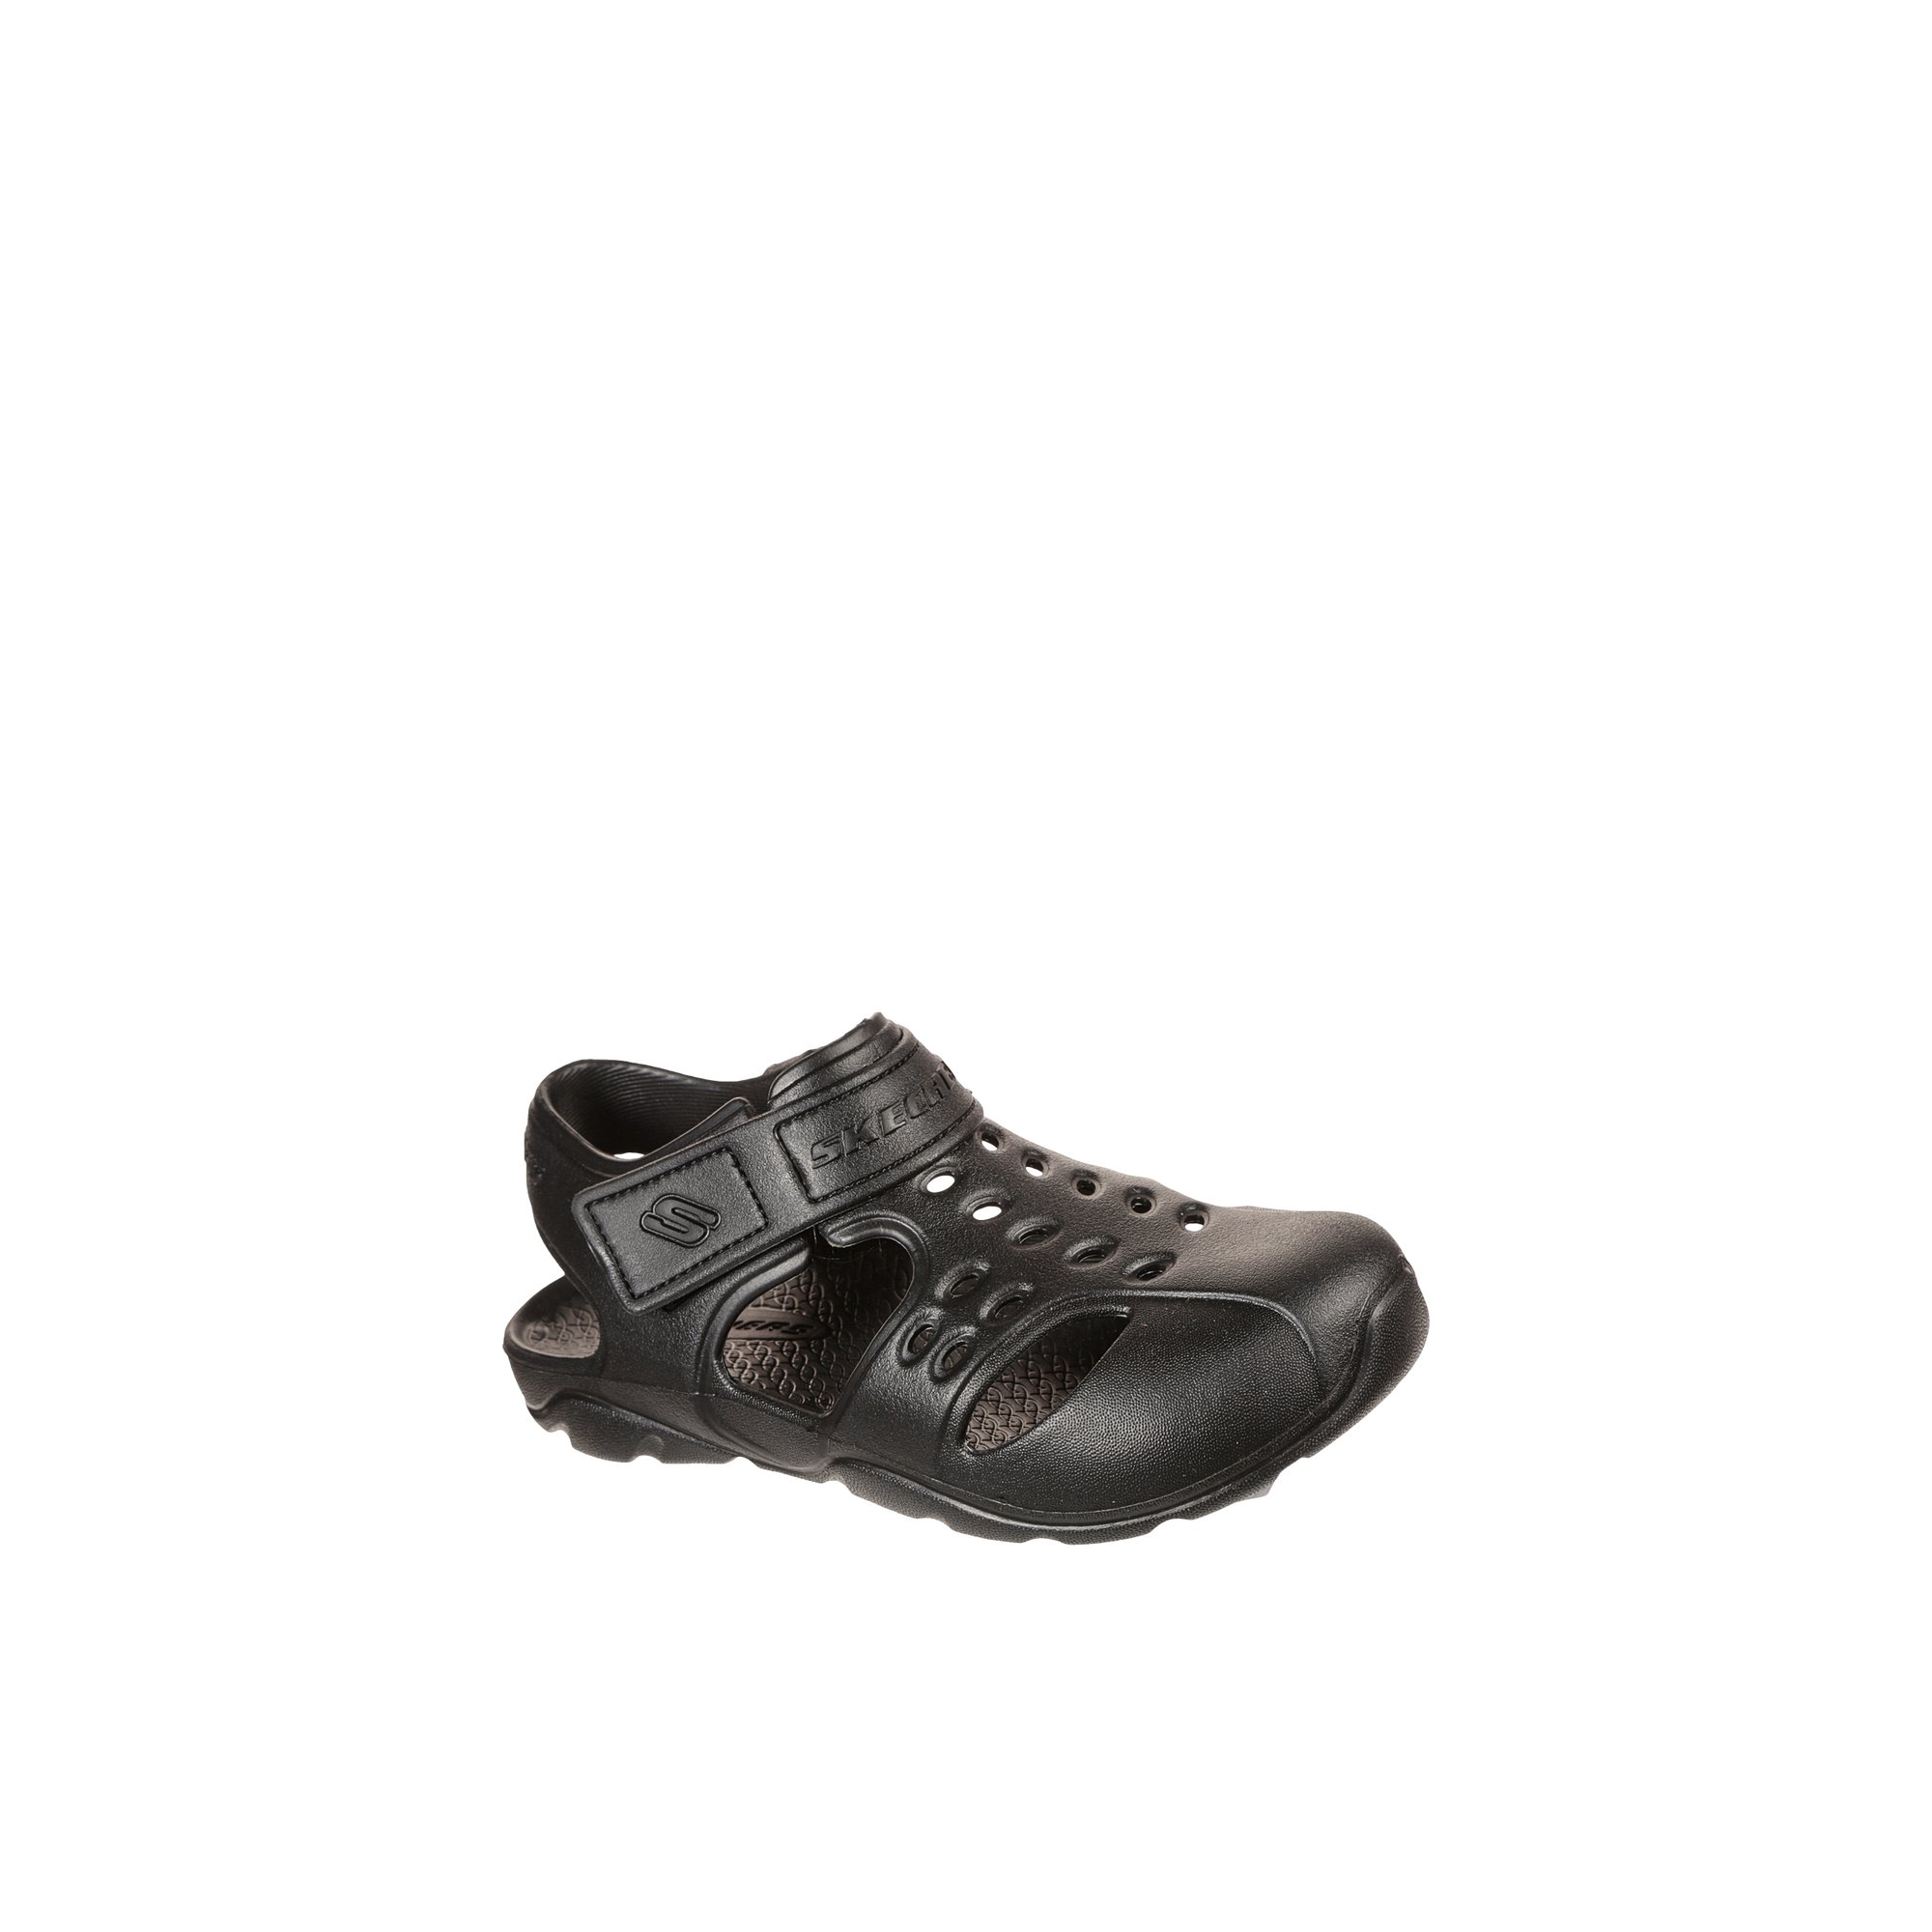 Skechers Waveblast-jb - Kids Boys Junior Sandals - Black (Shoes) photo